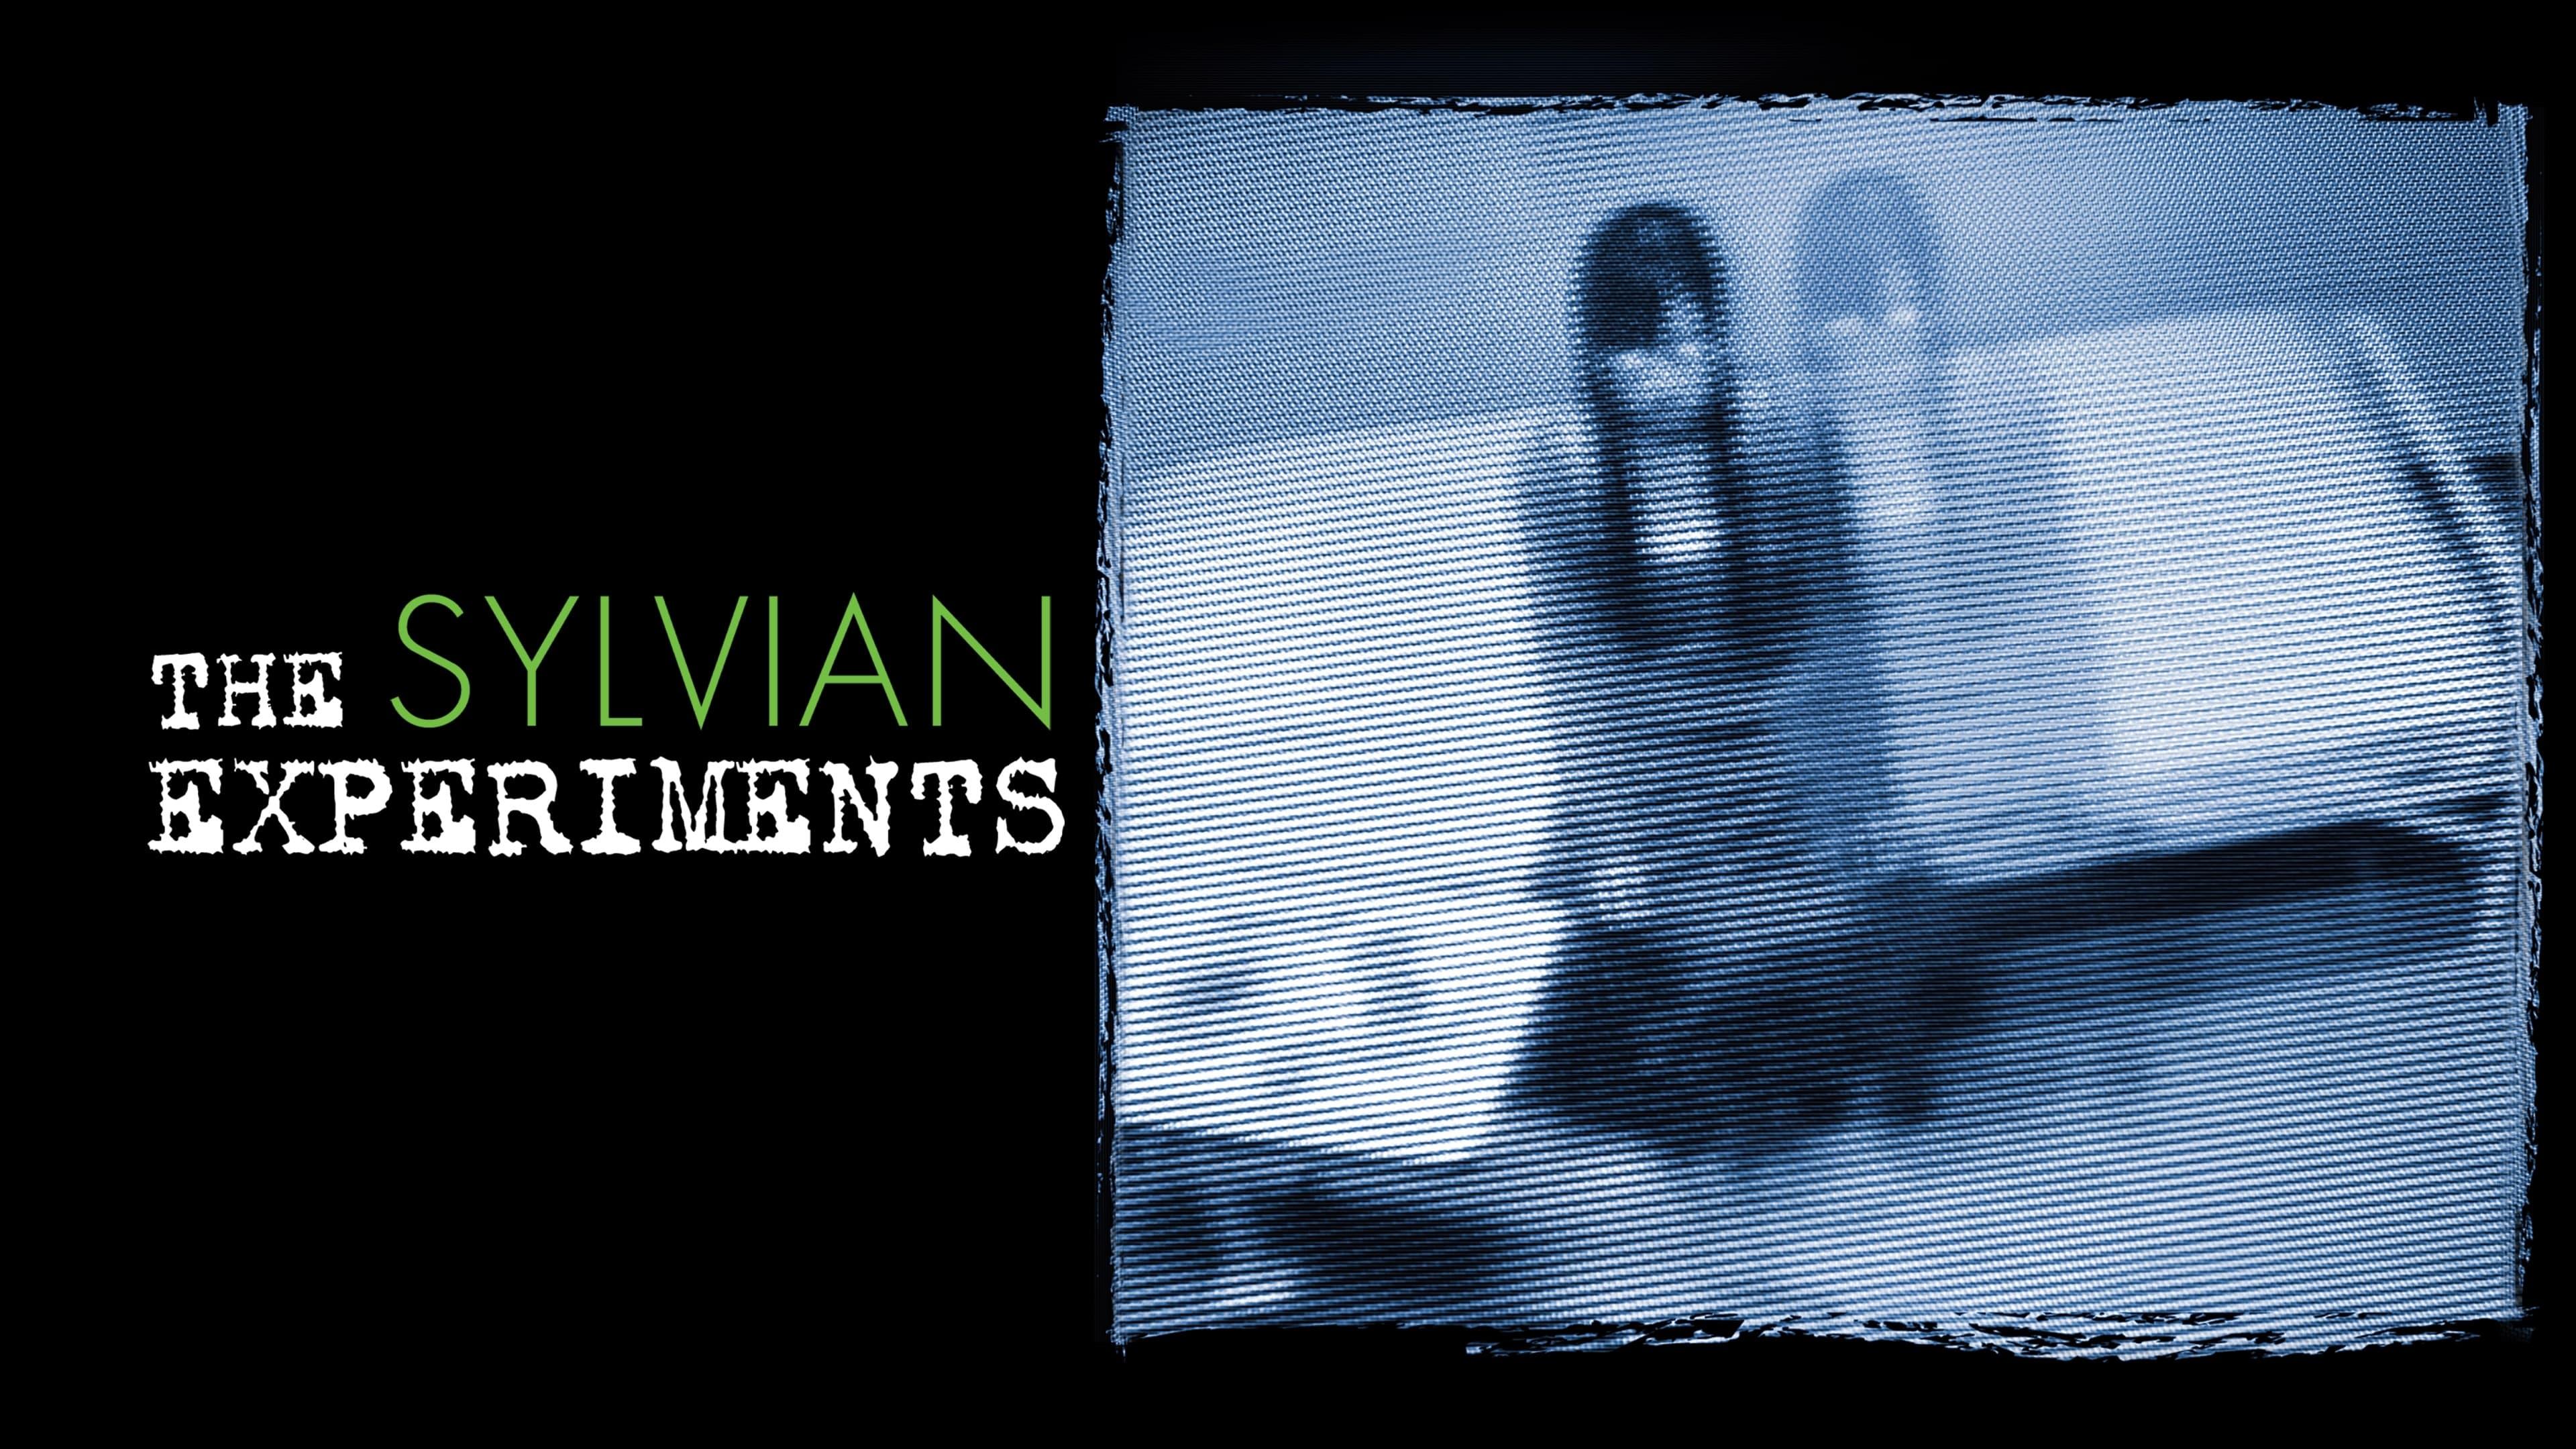 The Sylvian Experiments backdrop